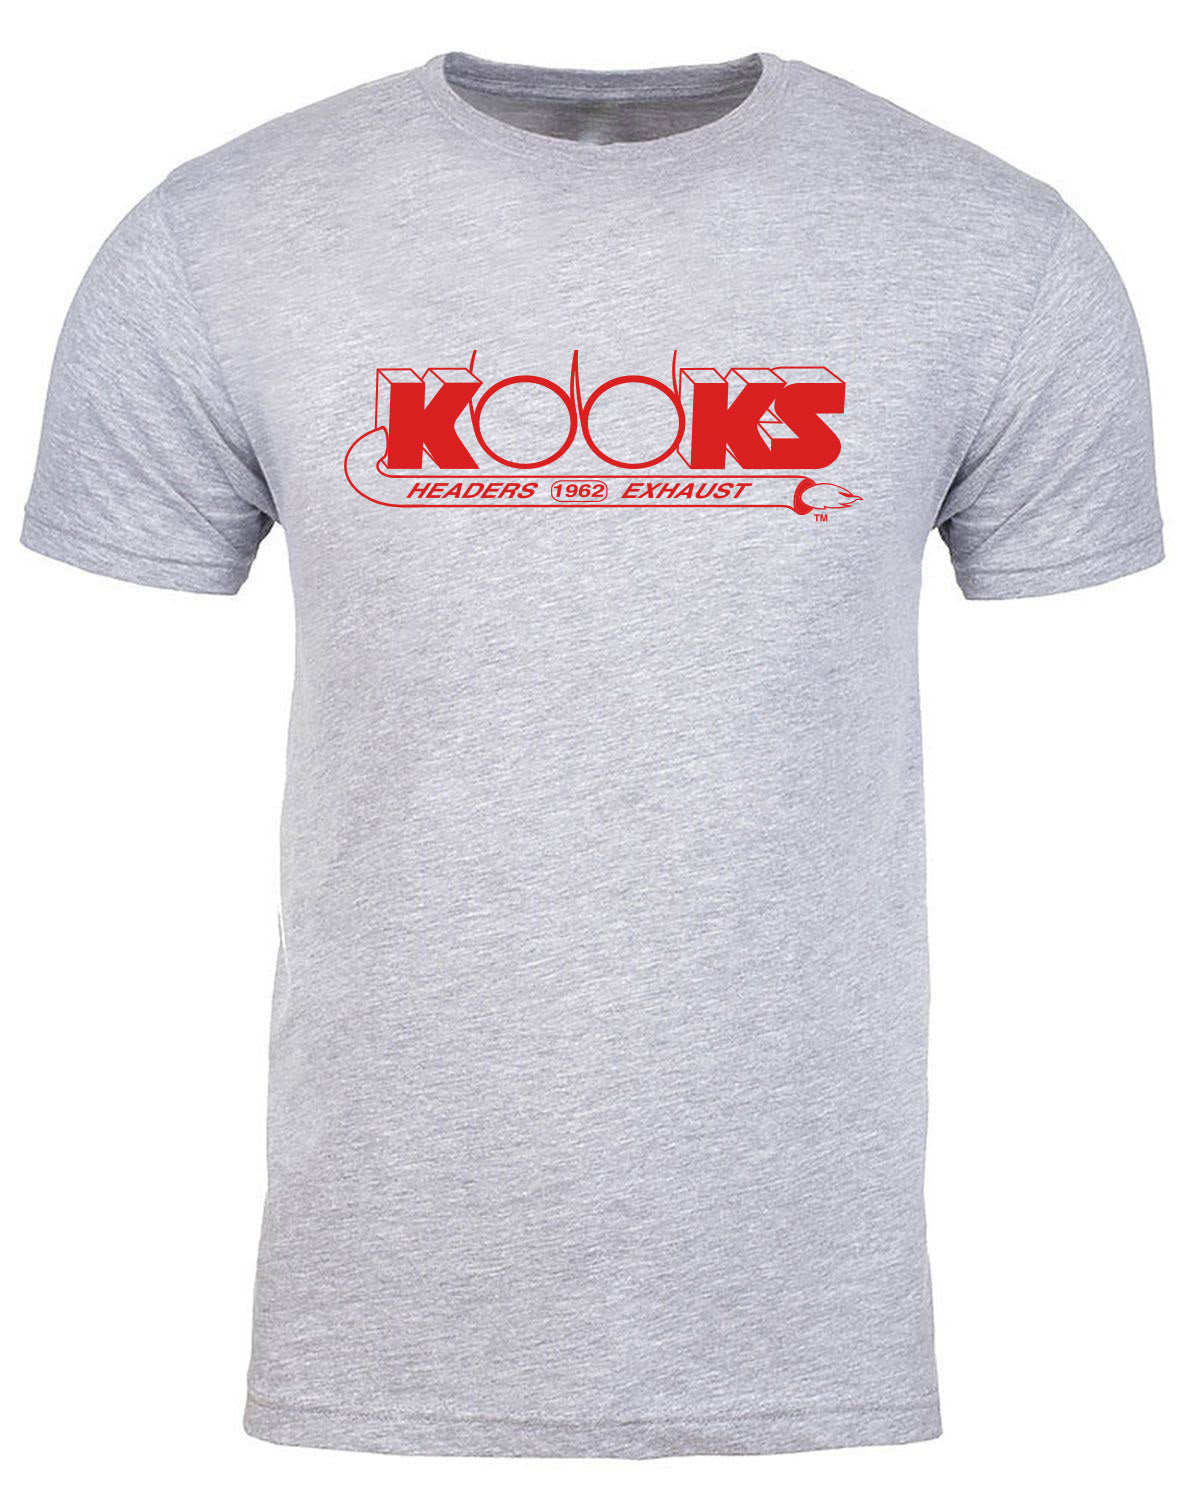 Kooks Custom Headers T-Shirt TS-100648-02